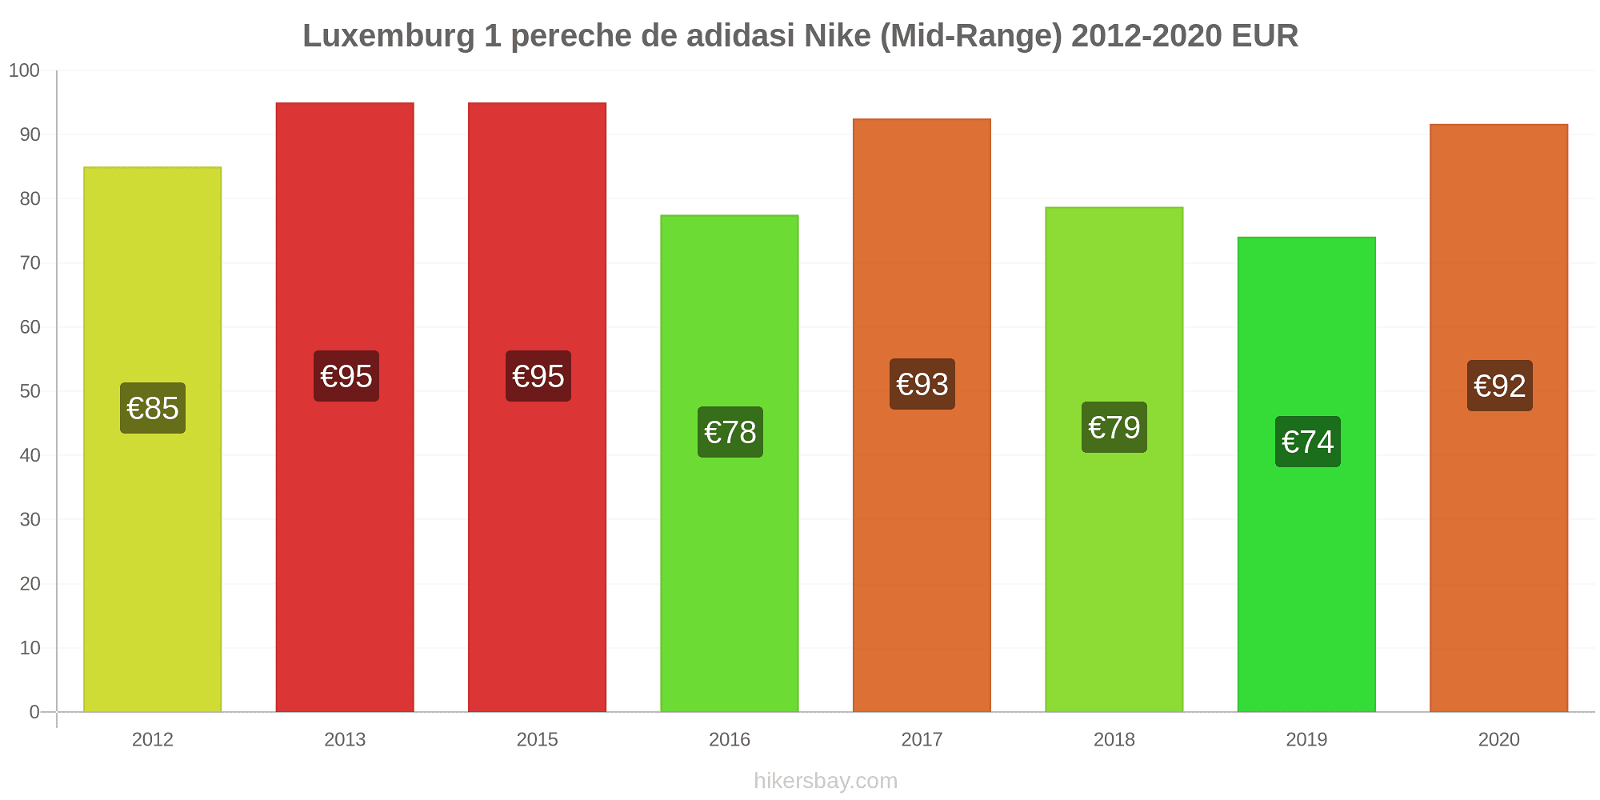 Luxemburg modificări de preț 1 pereche de adidasi Nike (Mid-Range) hikersbay.com